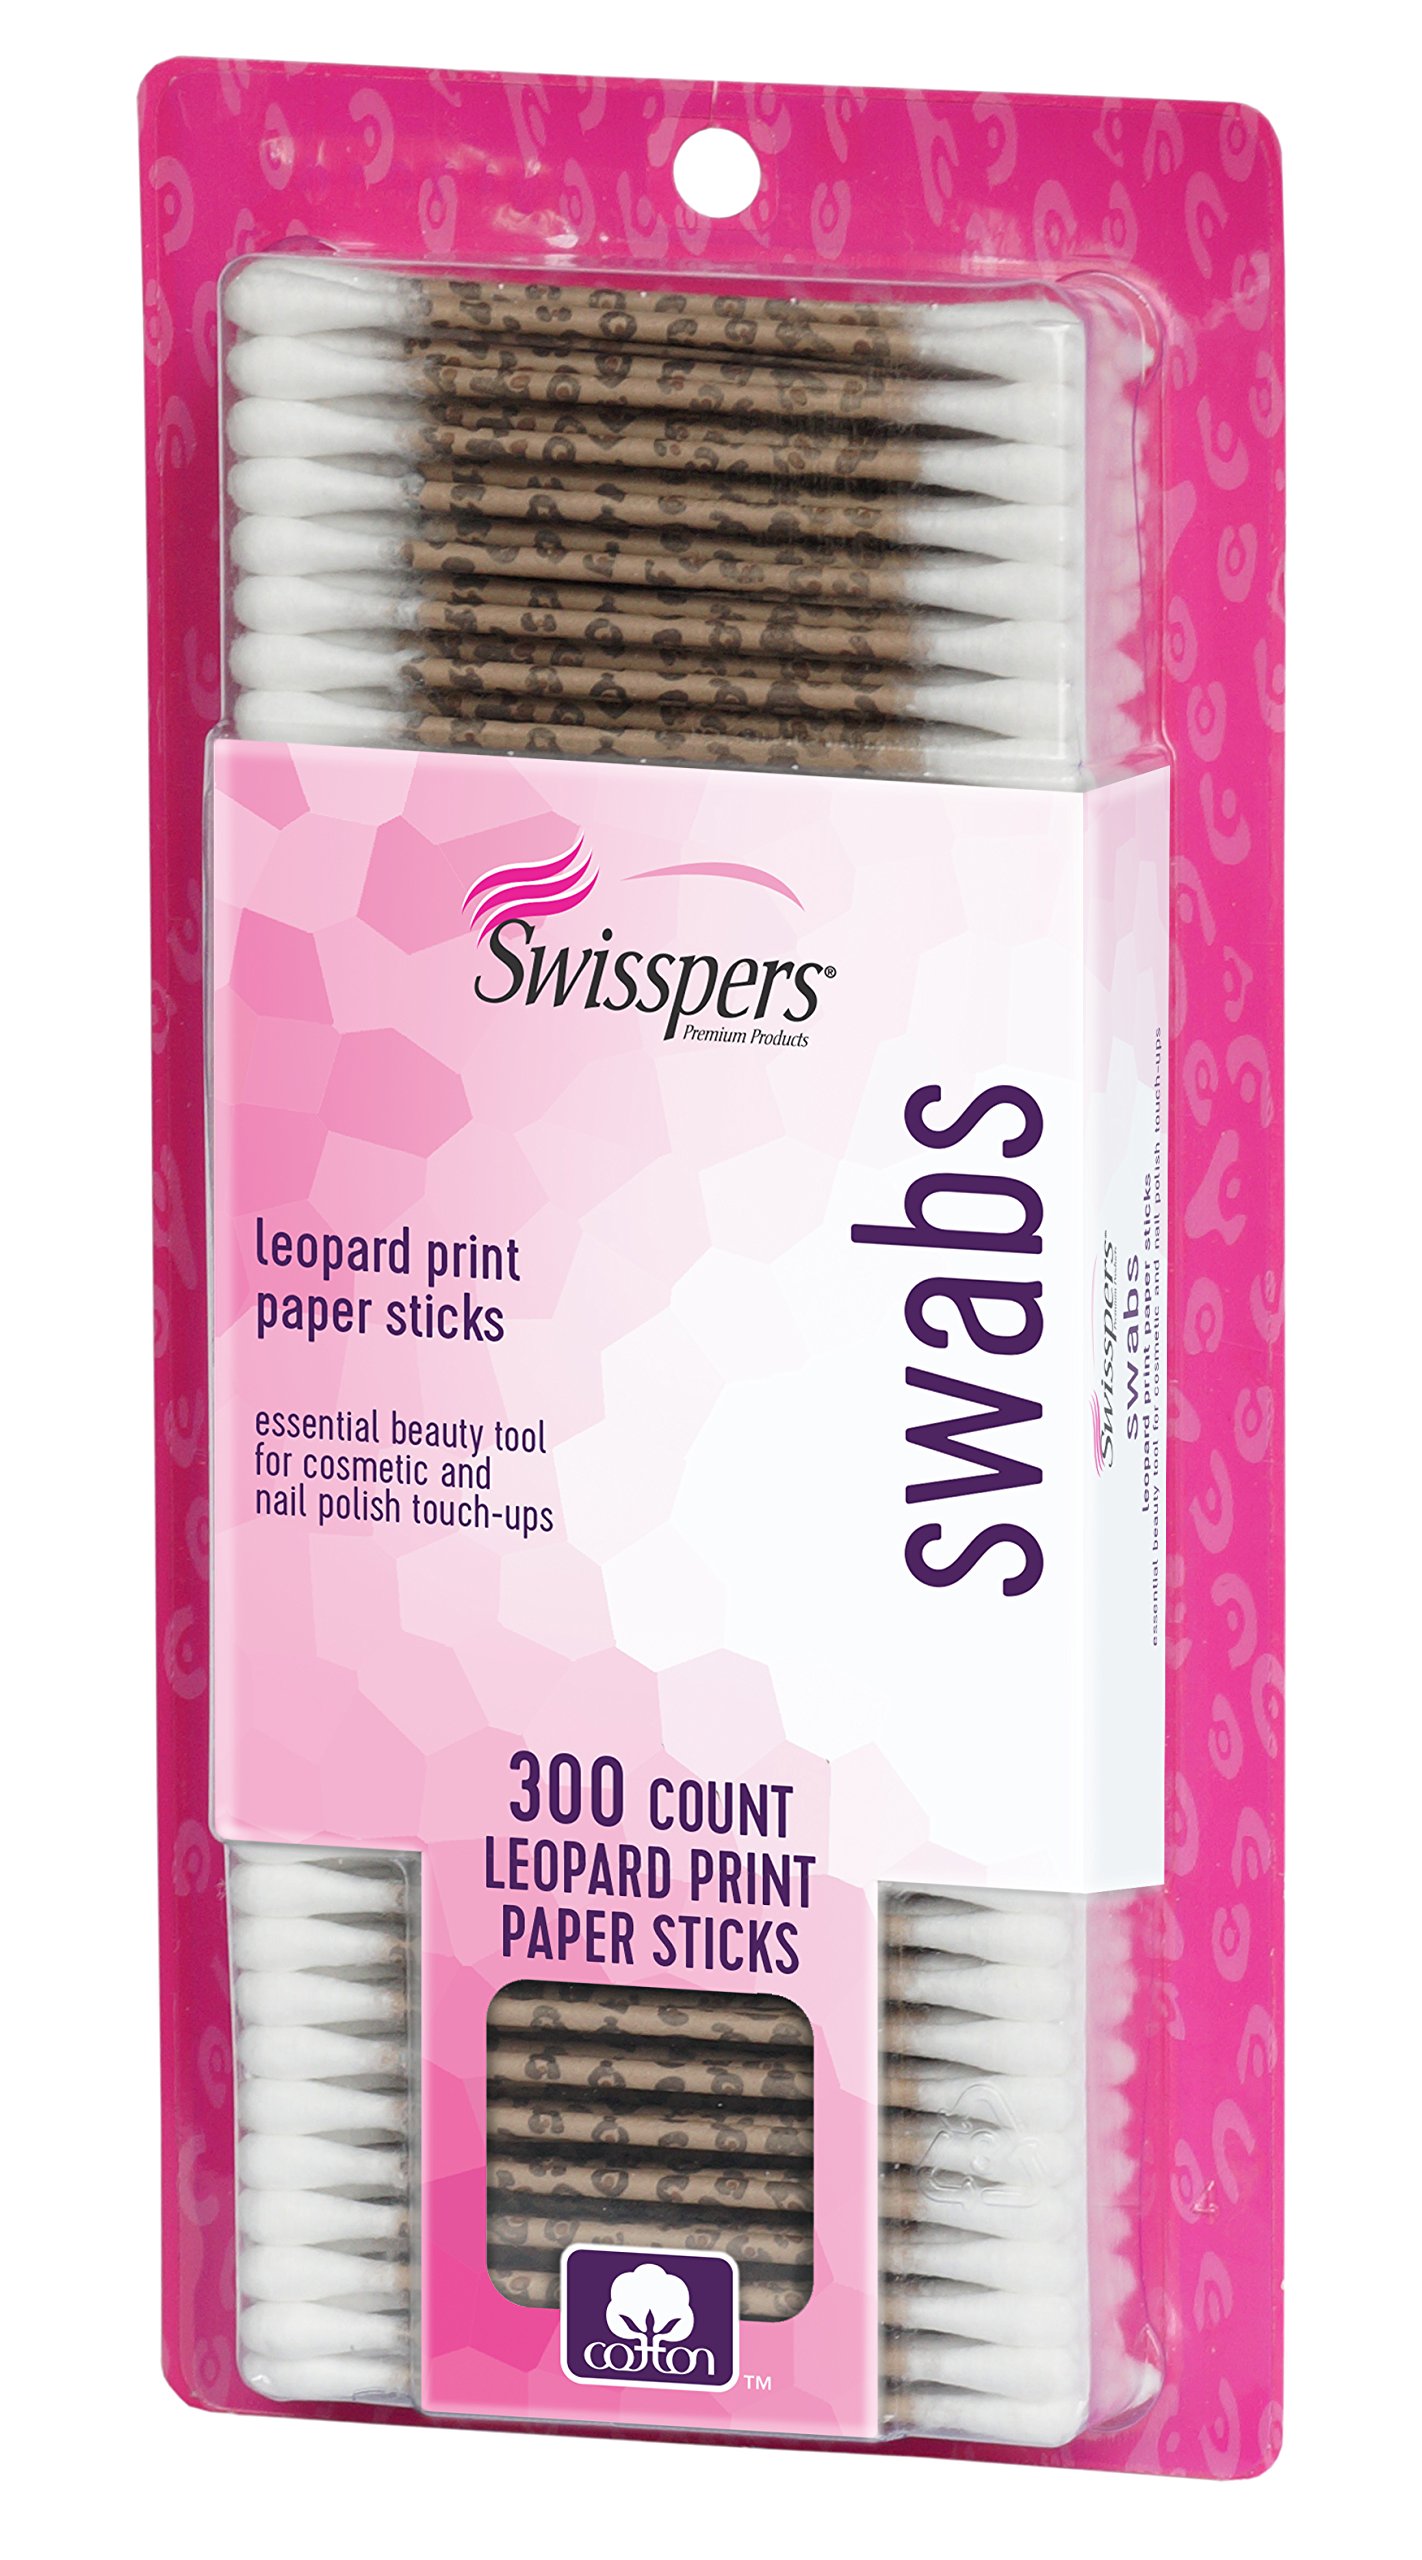 Swisspers Premium Cotton Swabs, 100% Pure Cotton Tips, Leopard Print Paper Sticks, 300 Count Pack